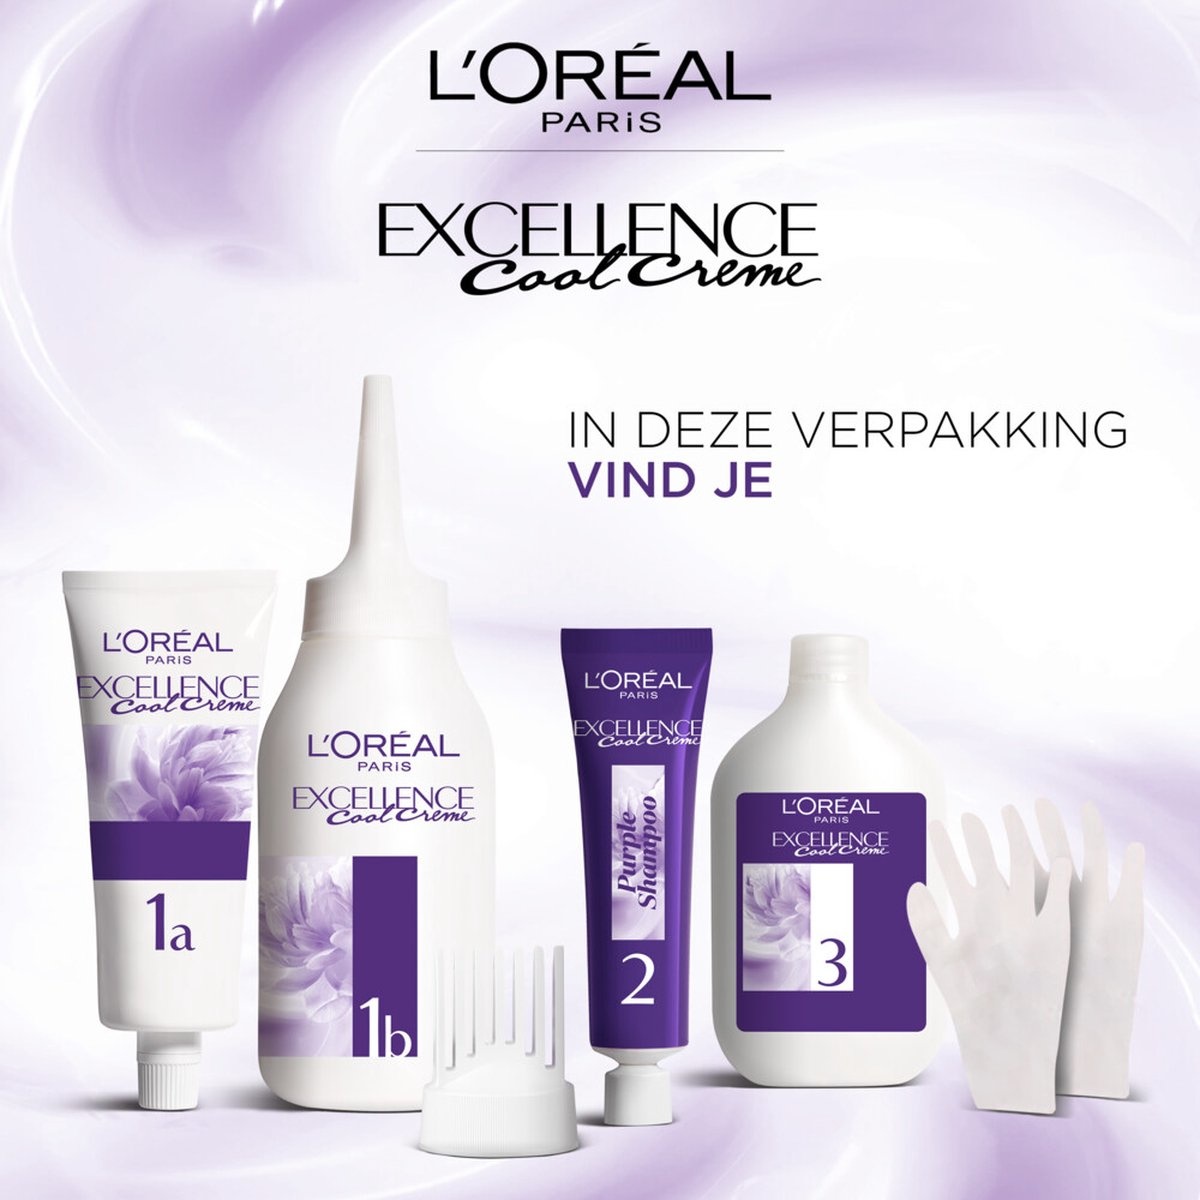 L'Oréal Paris Excellence Cool Creams 5.11 - Ultra Ash Light Brown - Permanent hair dye - Packaging damaged